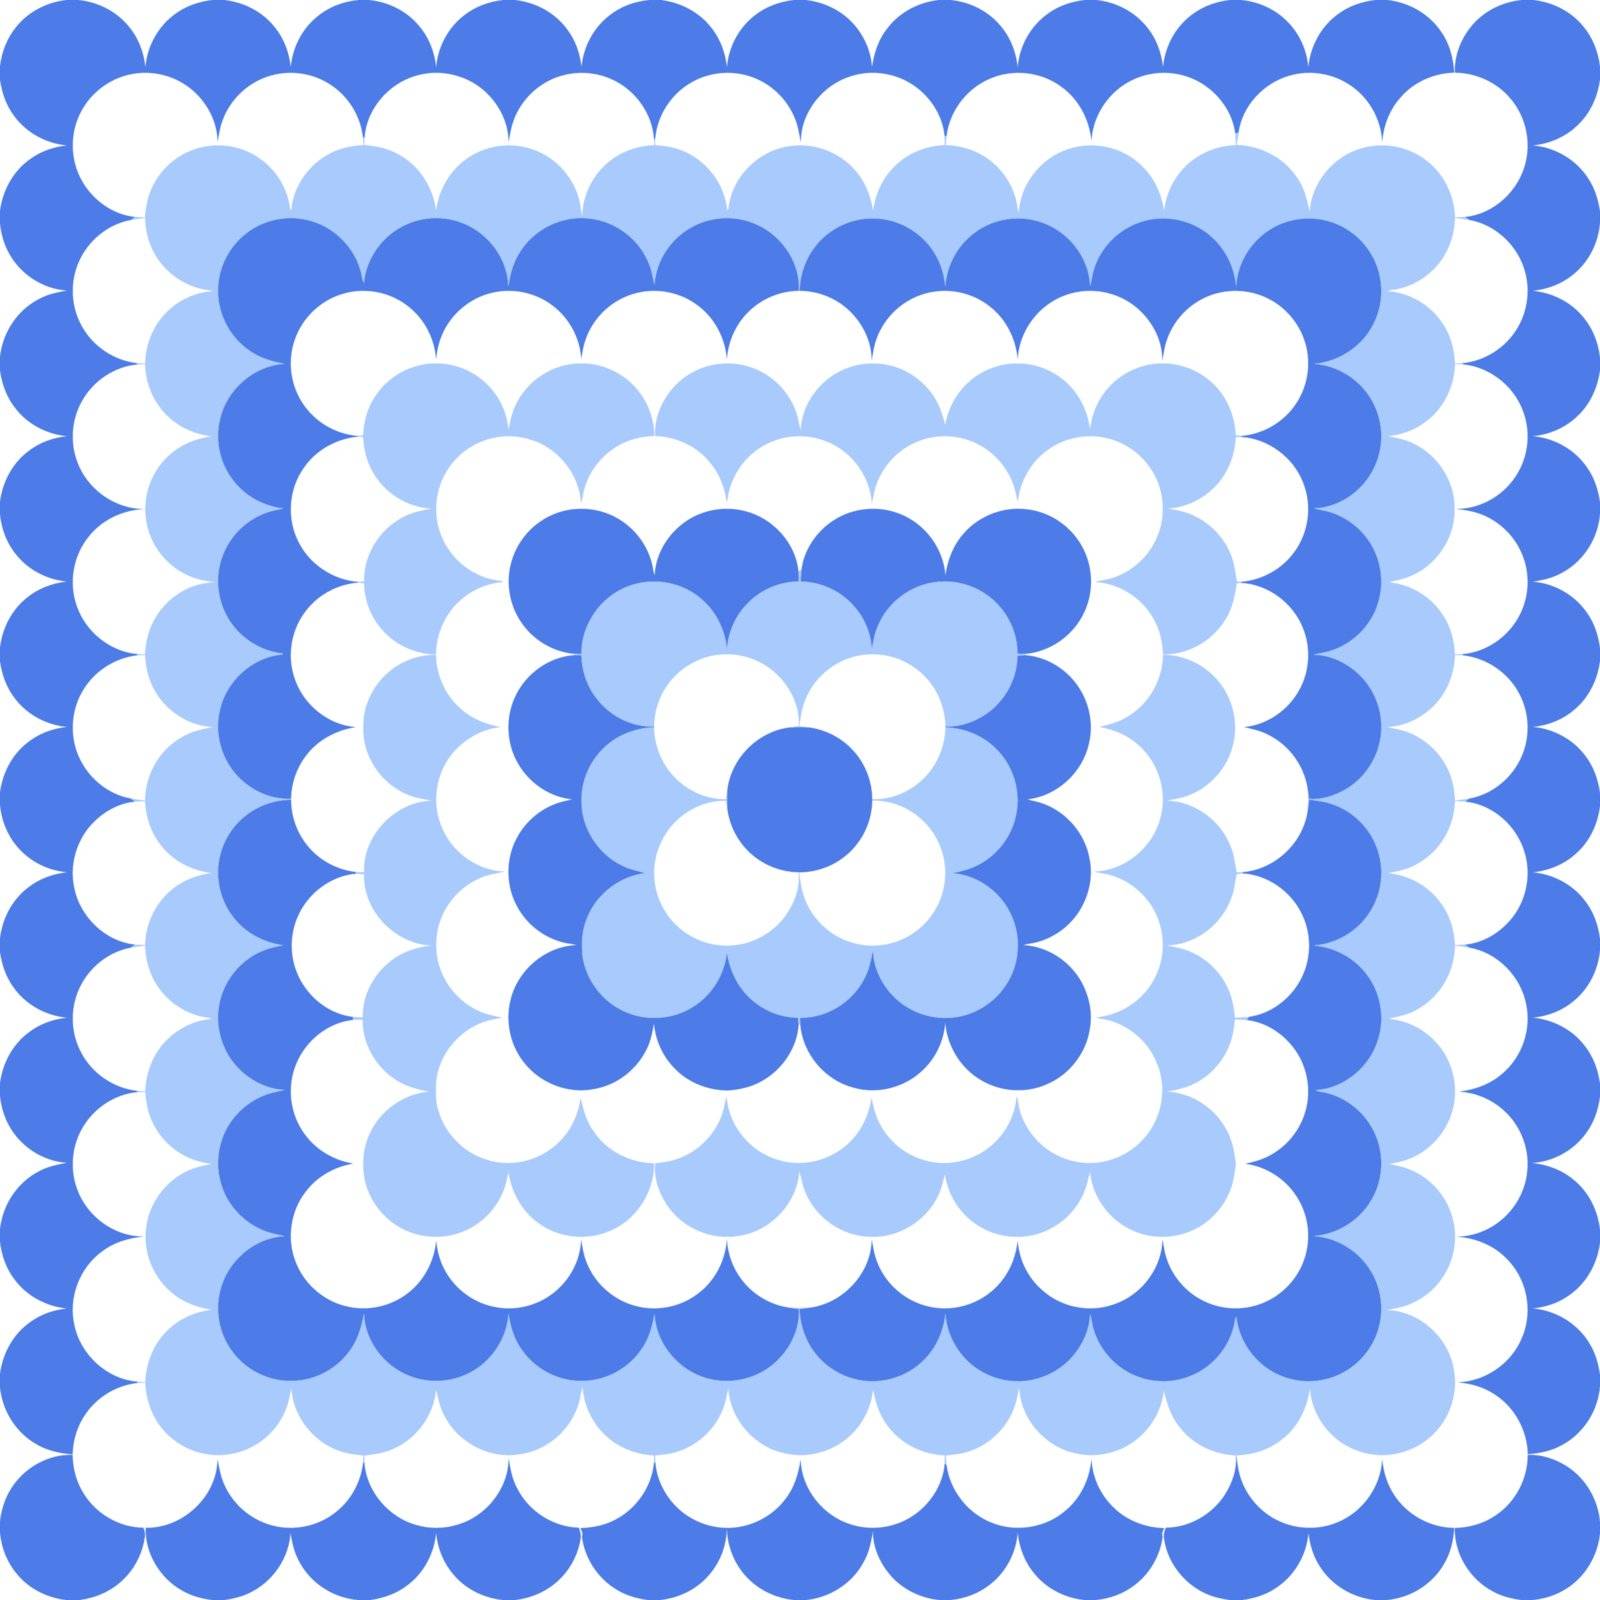 Polka dots pattern by ibphoto